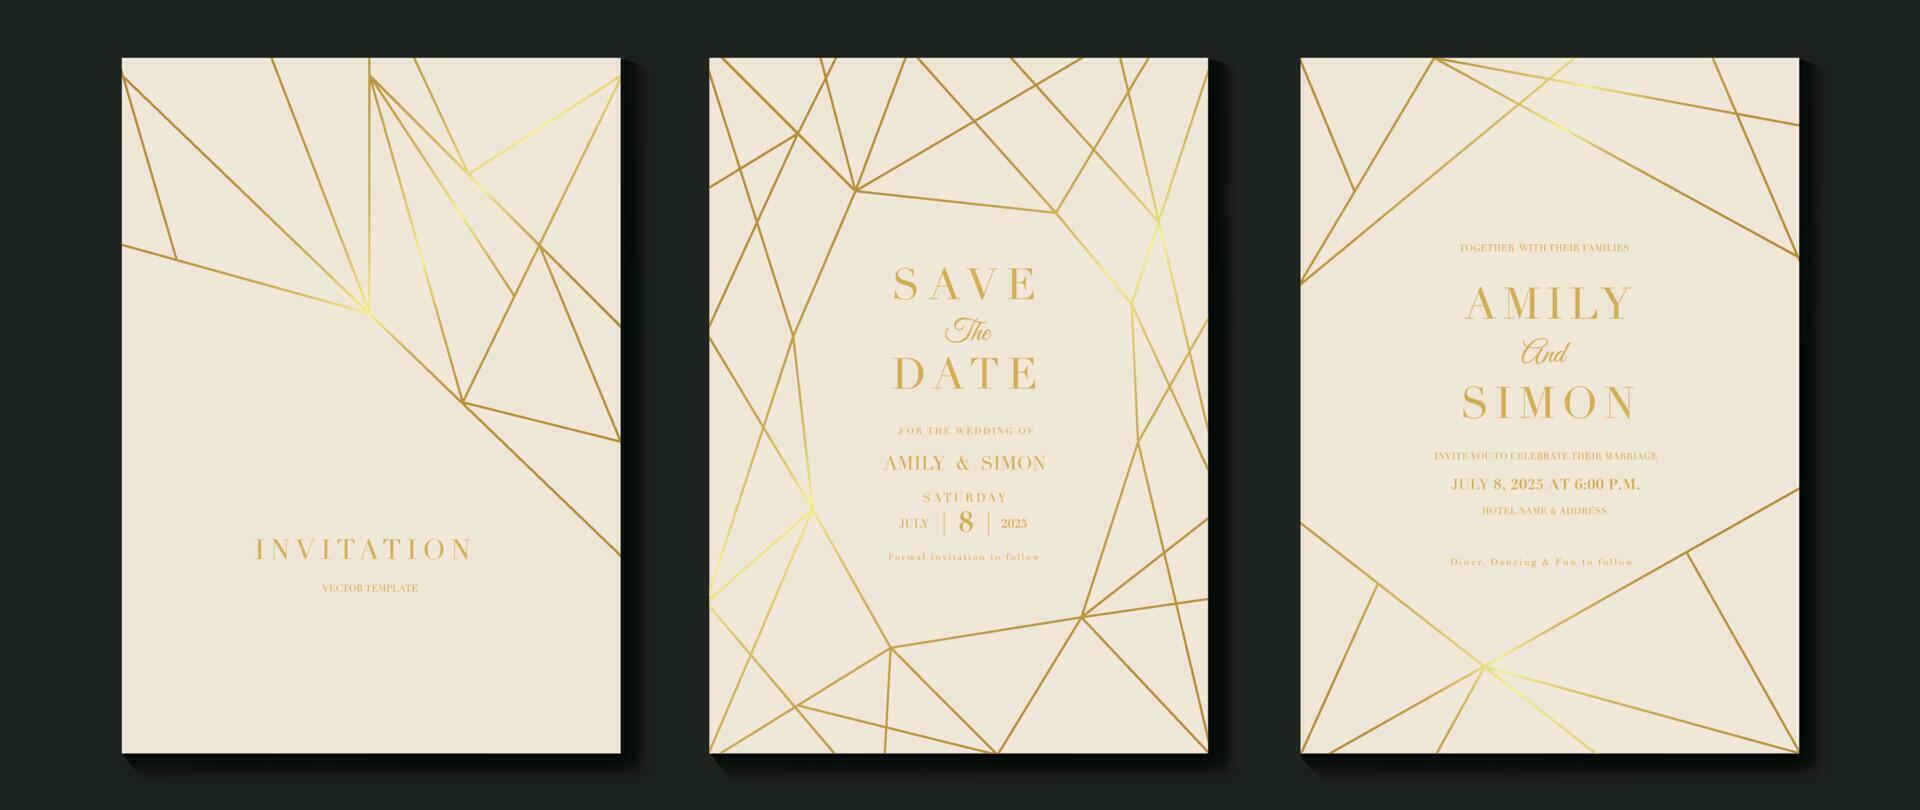 Luxury wedding invitation card background vector. Golden elegant geometric shape, gold lines on light background. Premium design illustration for wedding and vip cover template, banner, poster. vector